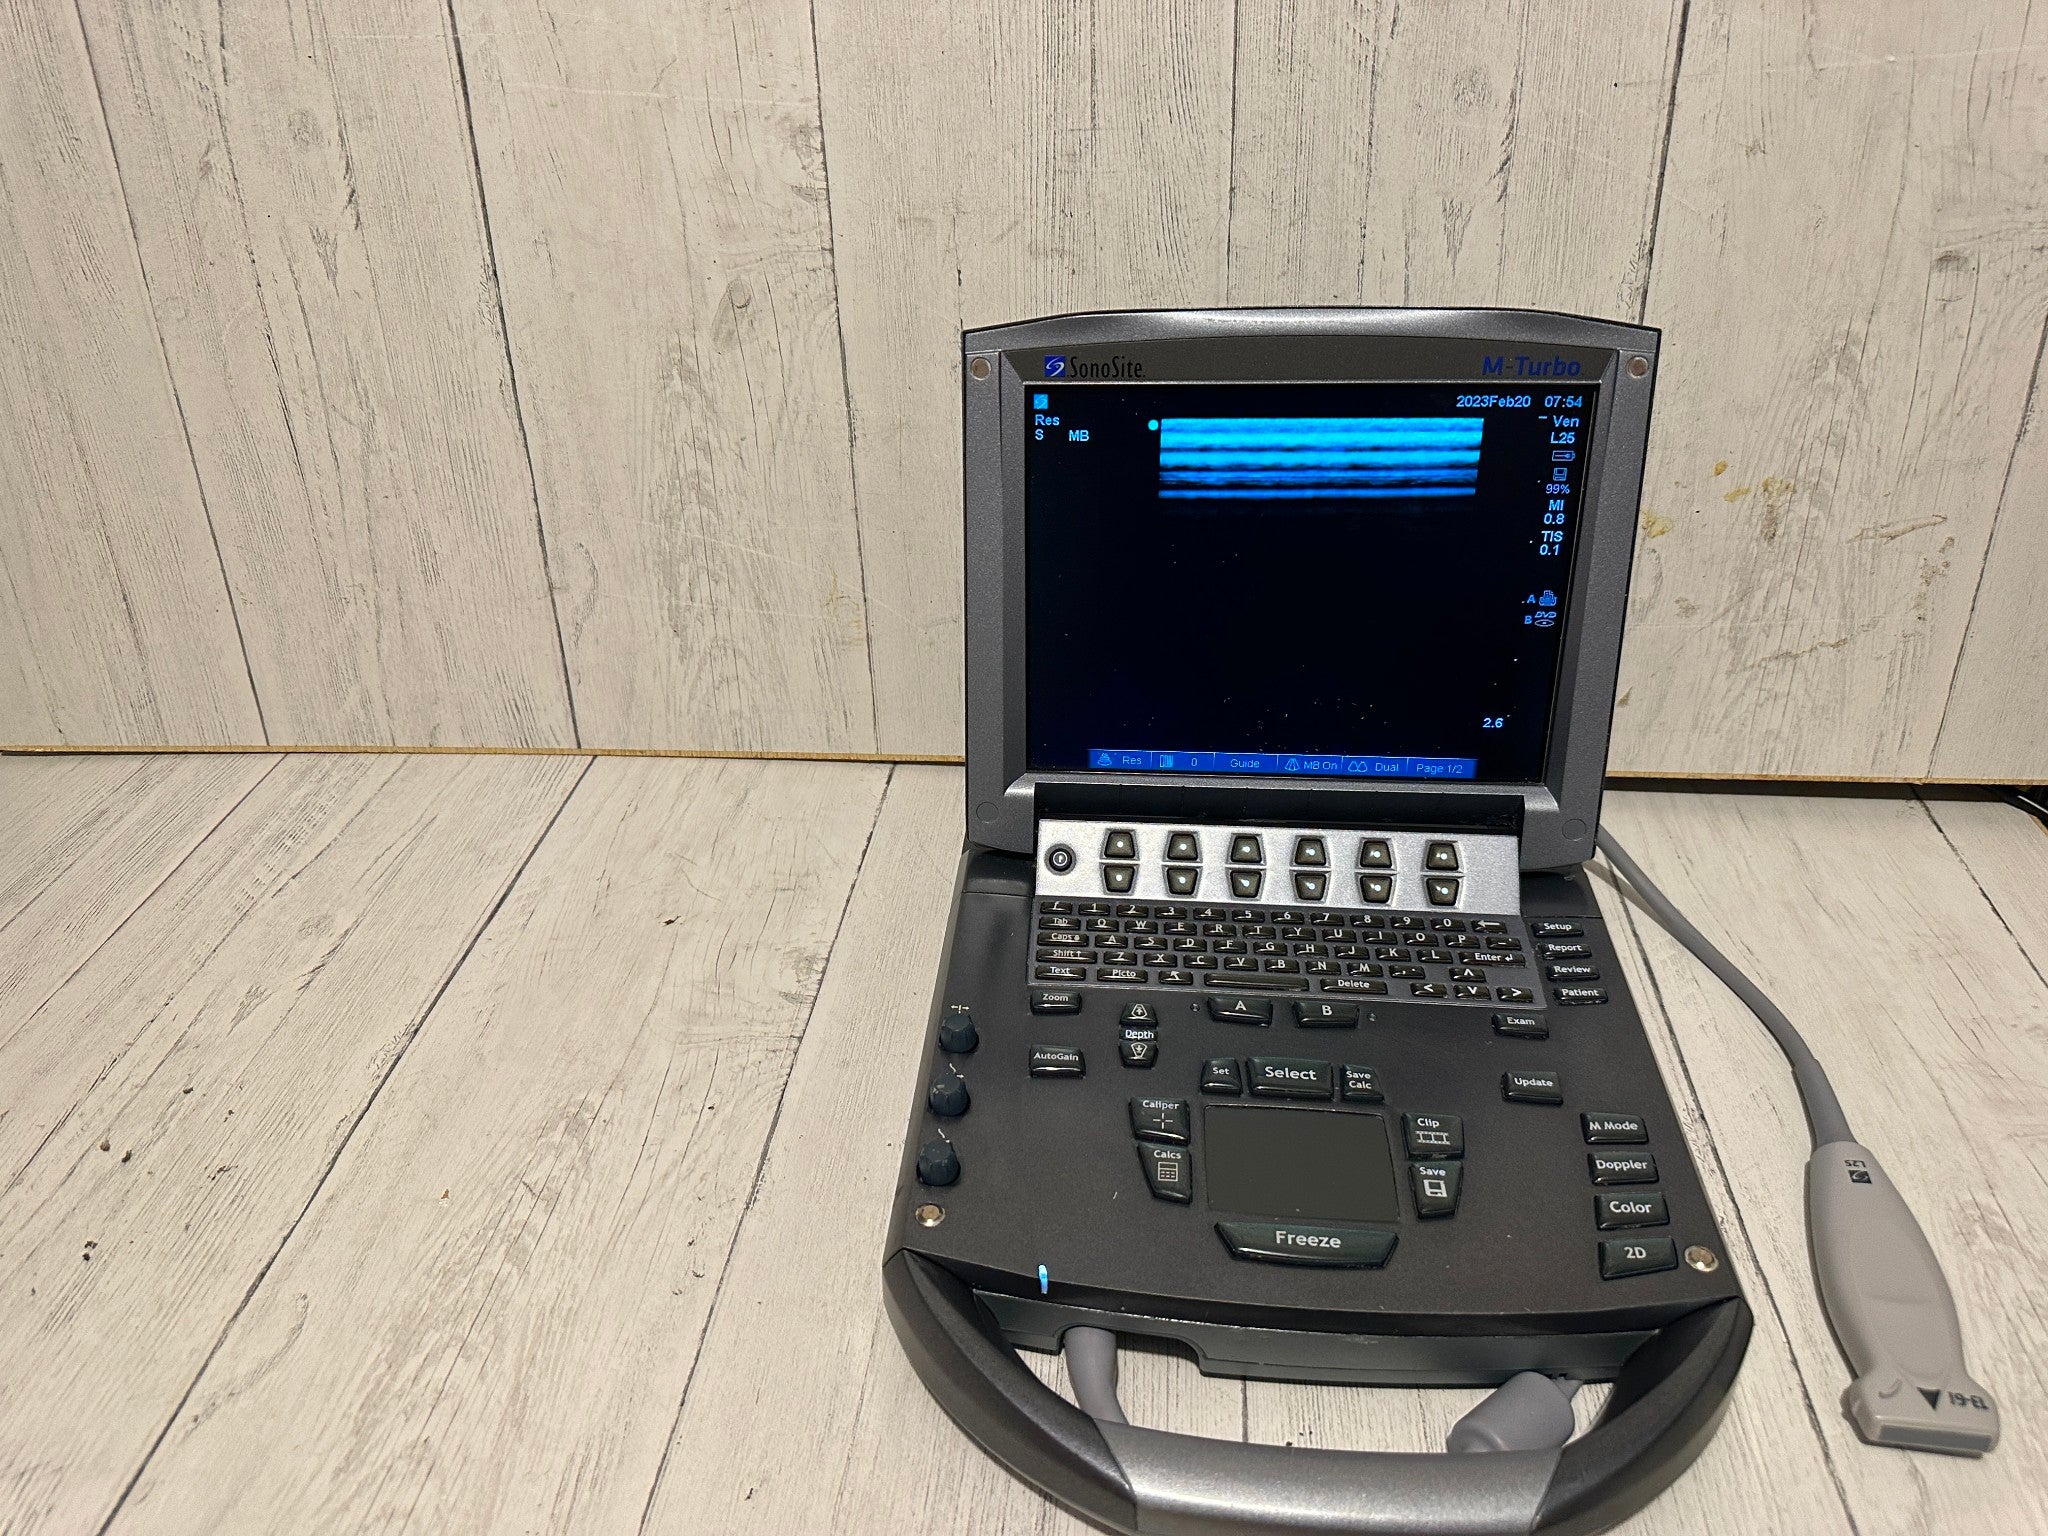 SonoSite M-Turbo Portable Ultrasound 2013 with Mini Dock Station